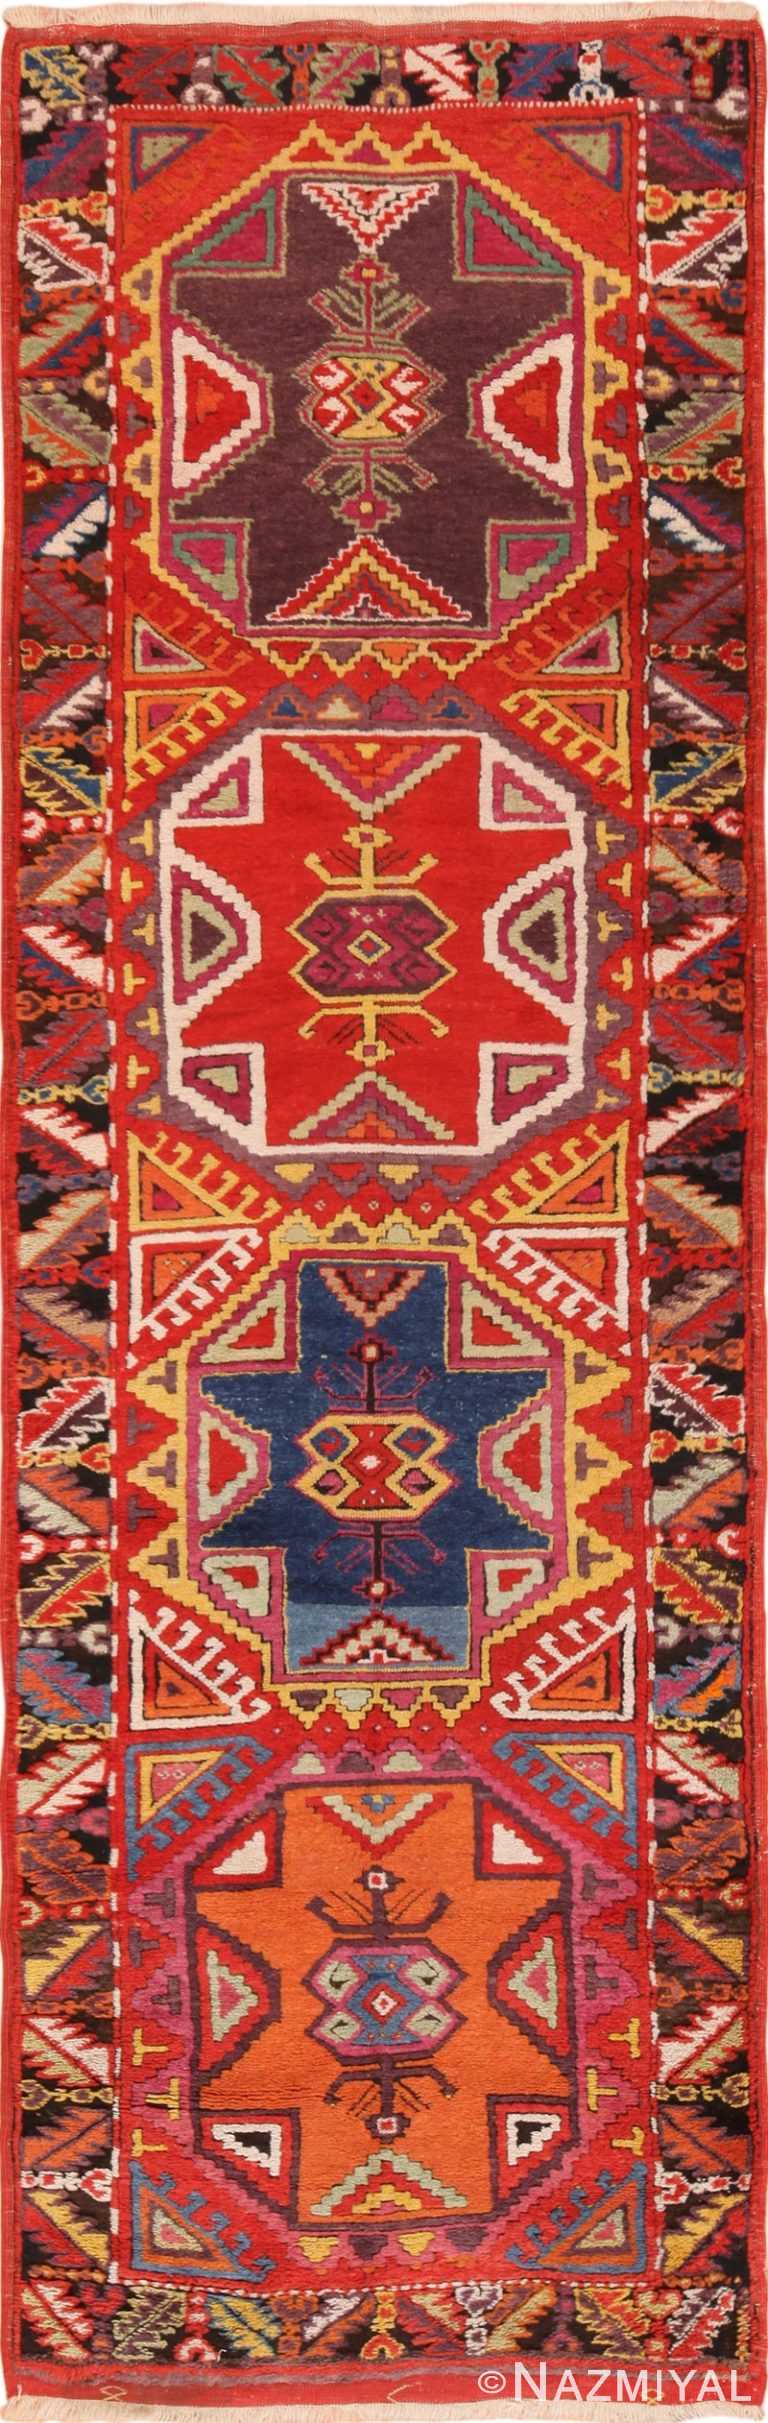 Full view Turkish Konya runner rug 70171 by Nazmiyal